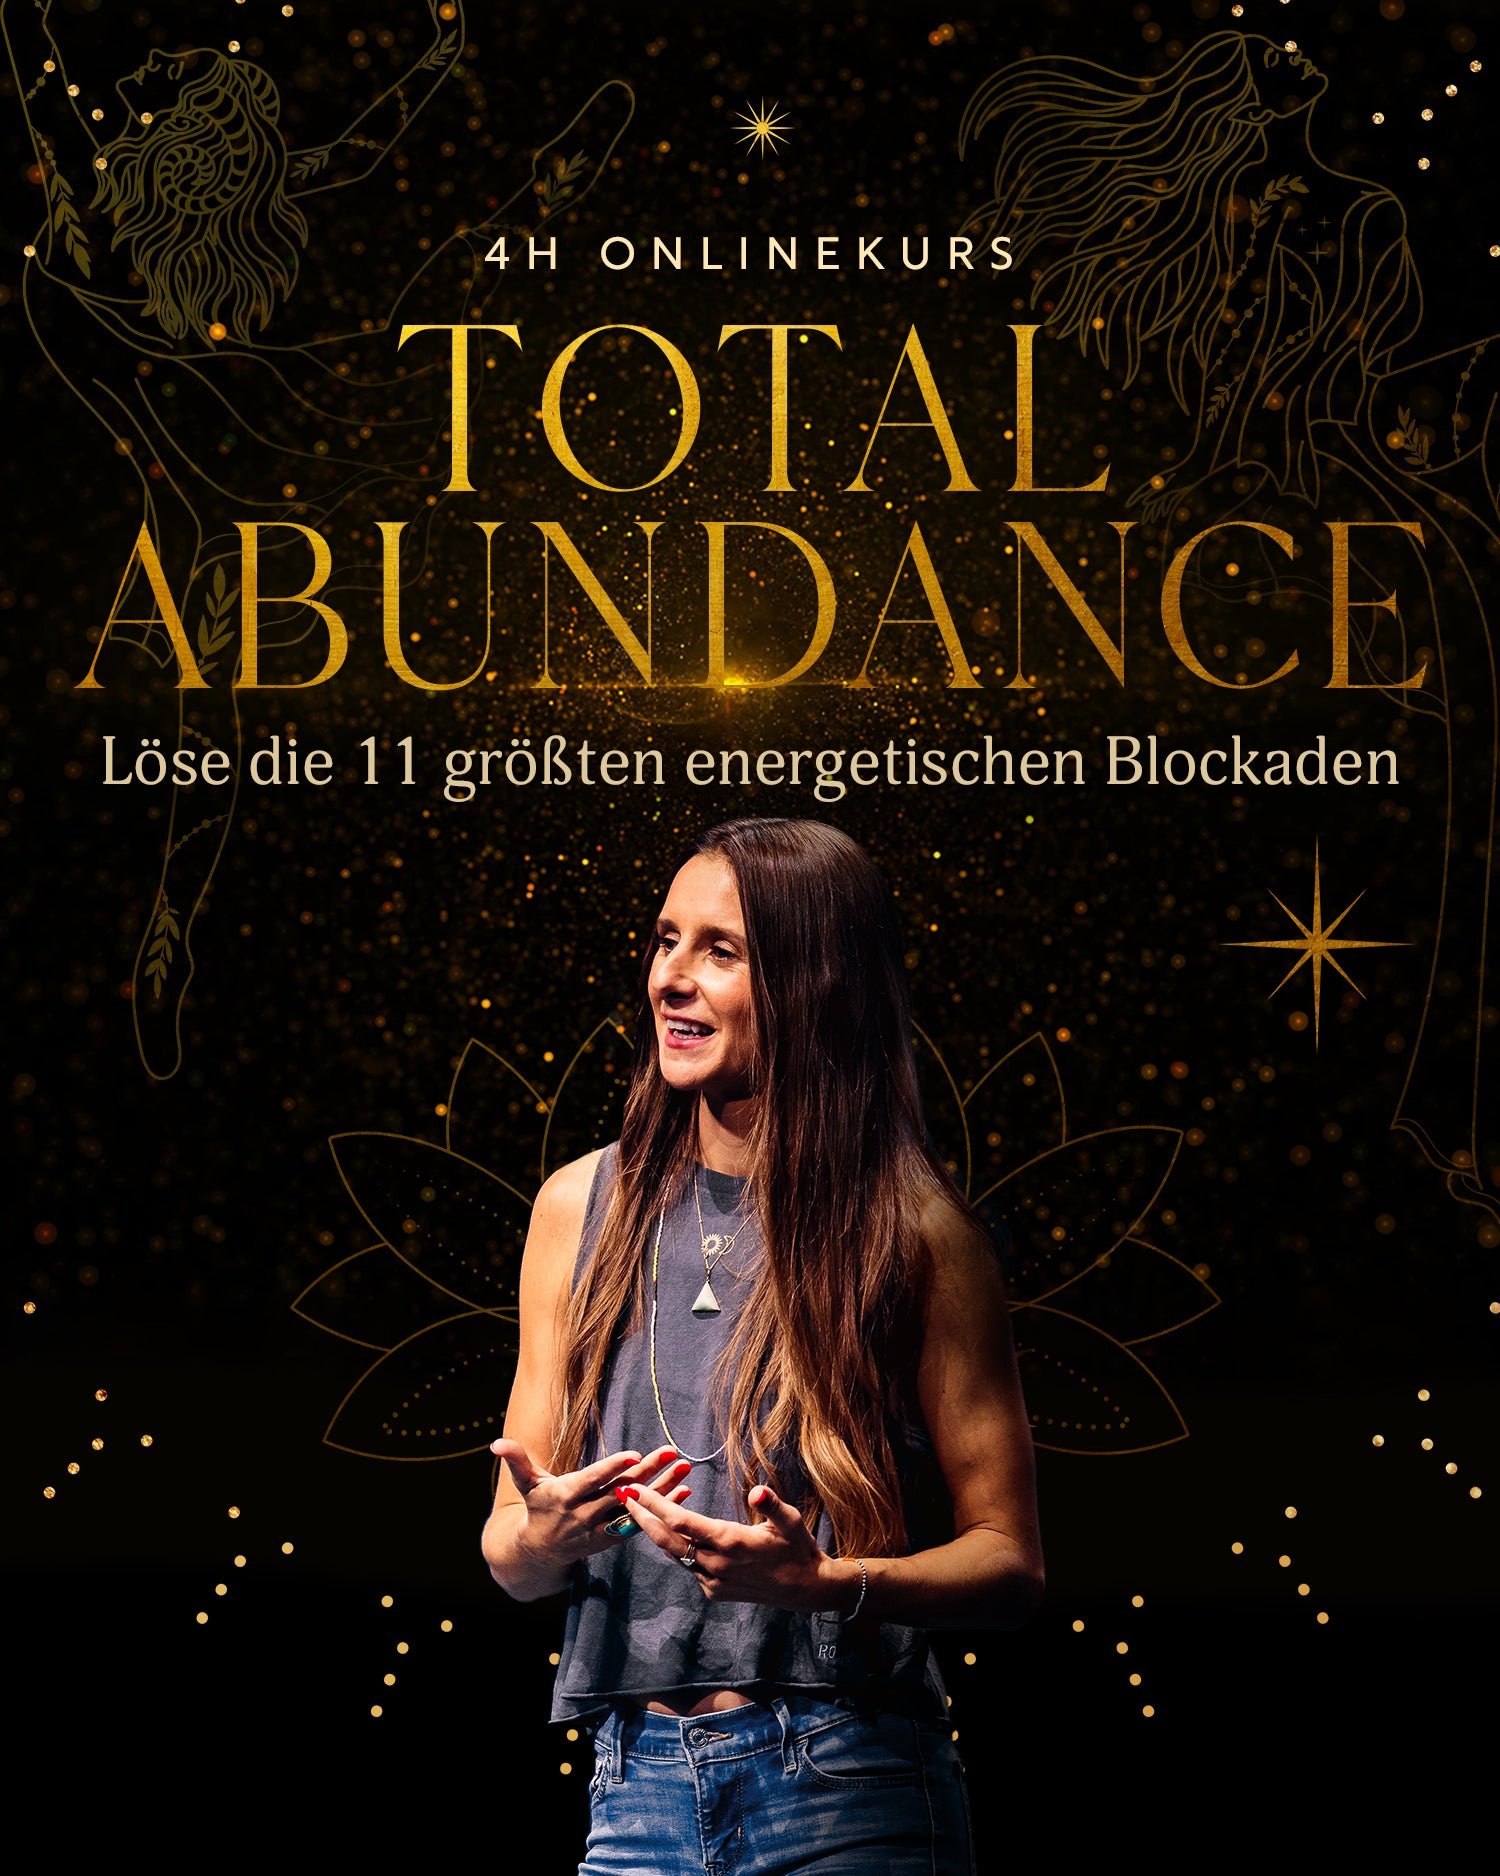 Total Abundance 4h Onlinekurs